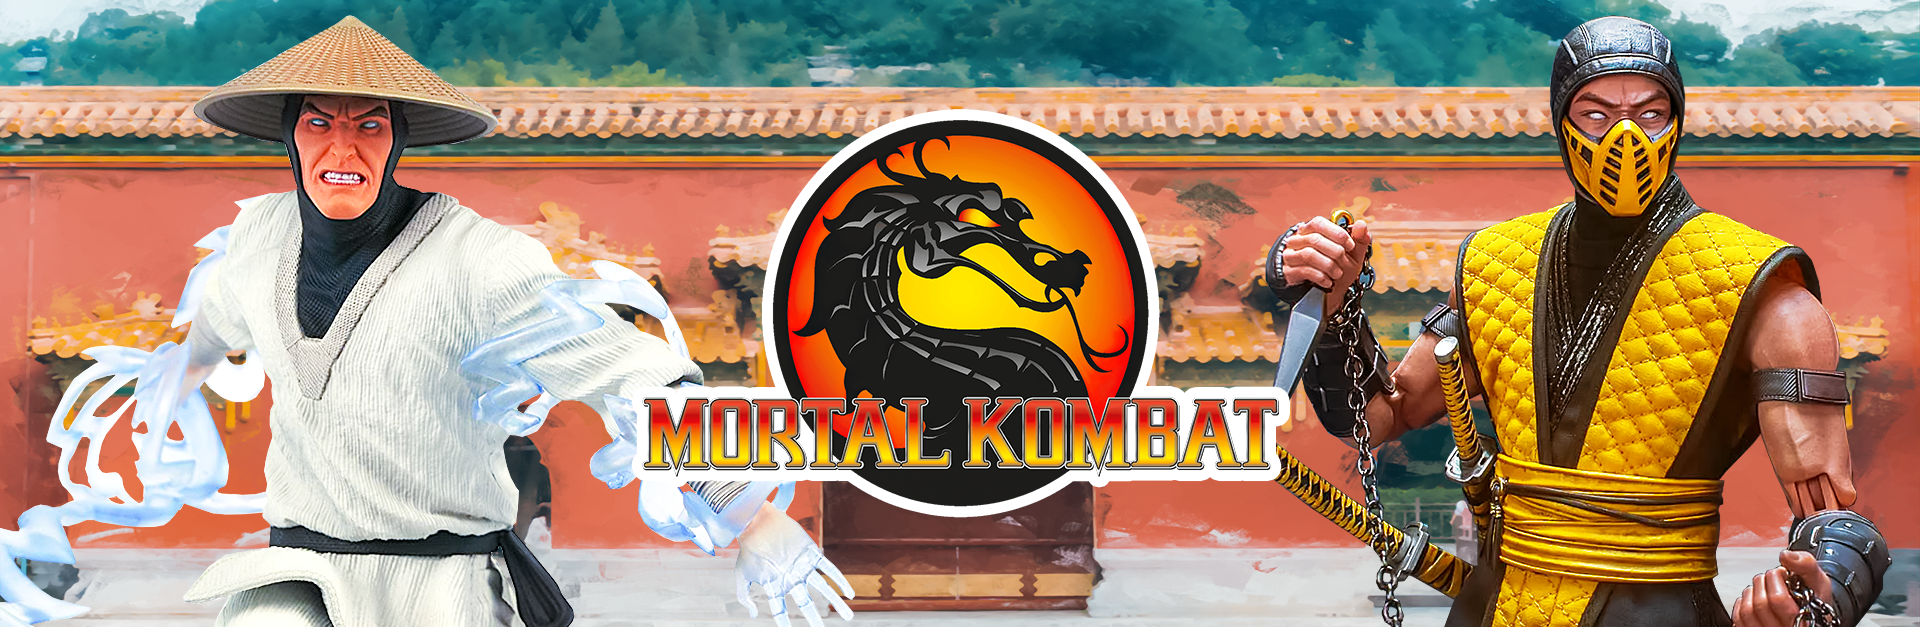 Buy Mortal Kombat 11 Kombat Pack 2 - Microsoft Store tn-ZA